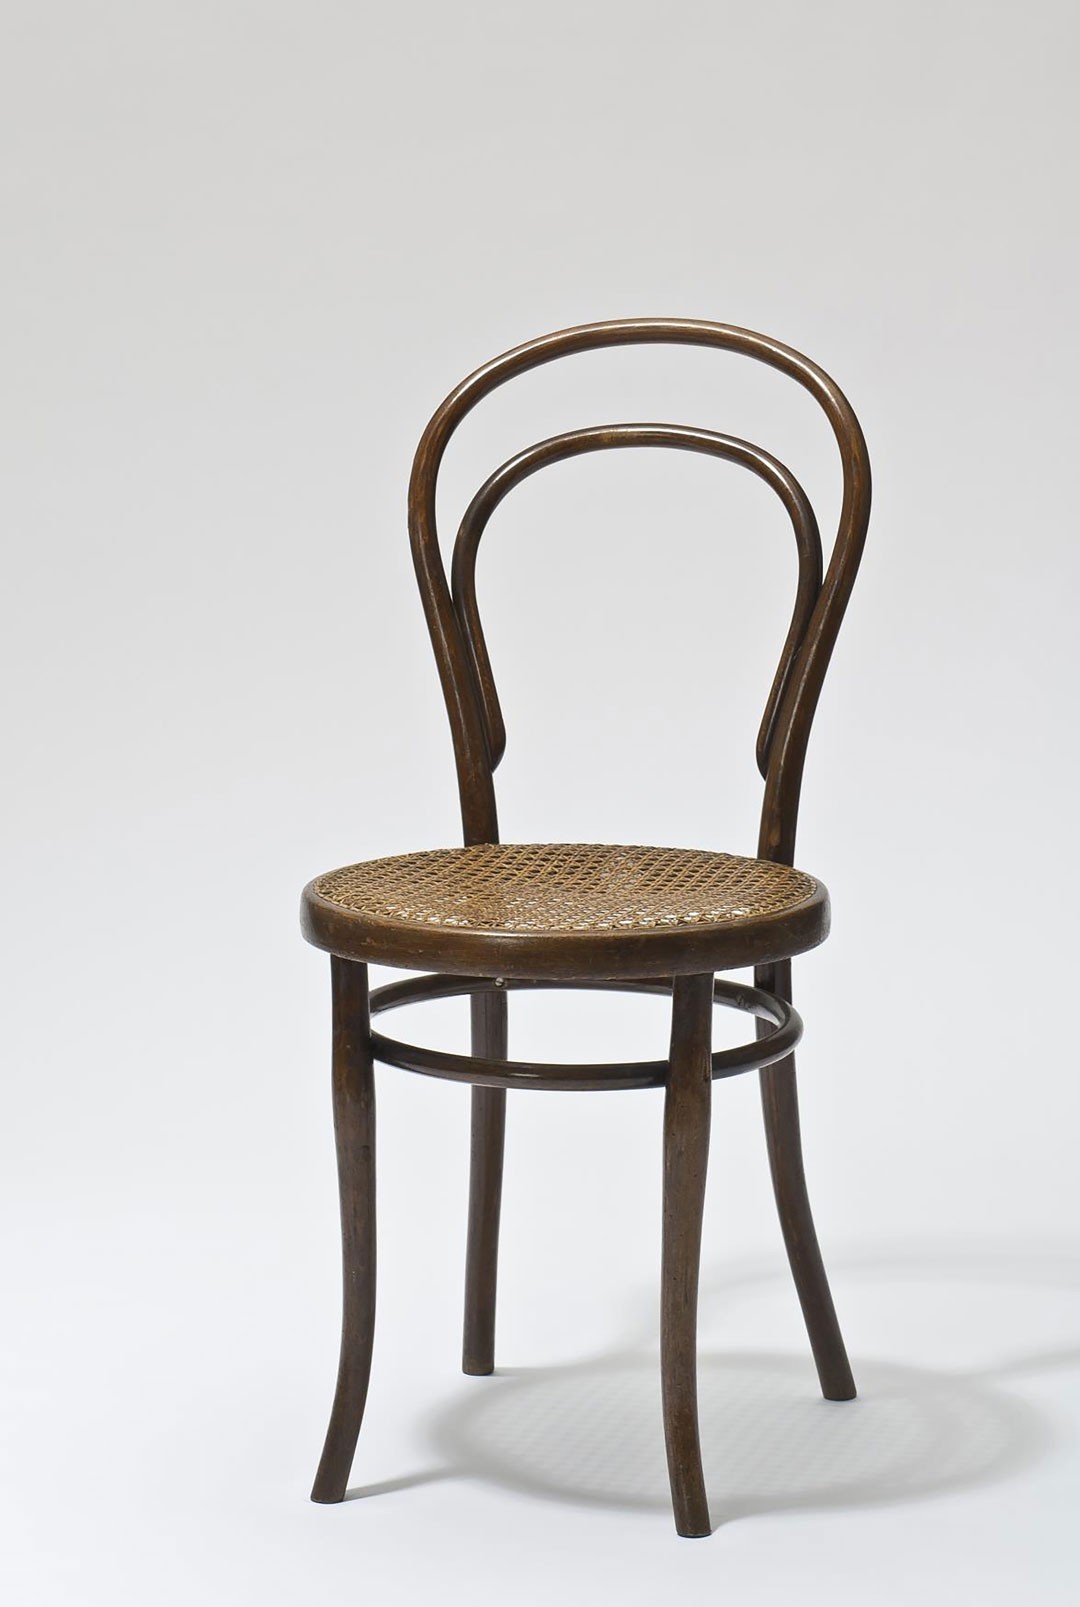 <BODY><div>Gebrüder Thonet, Chair, Model N0. 14, Vienna, 1859 (Execution: 1890–1918)</div><div>© MAK/Georg Mayer</div><div> </div></BODY>